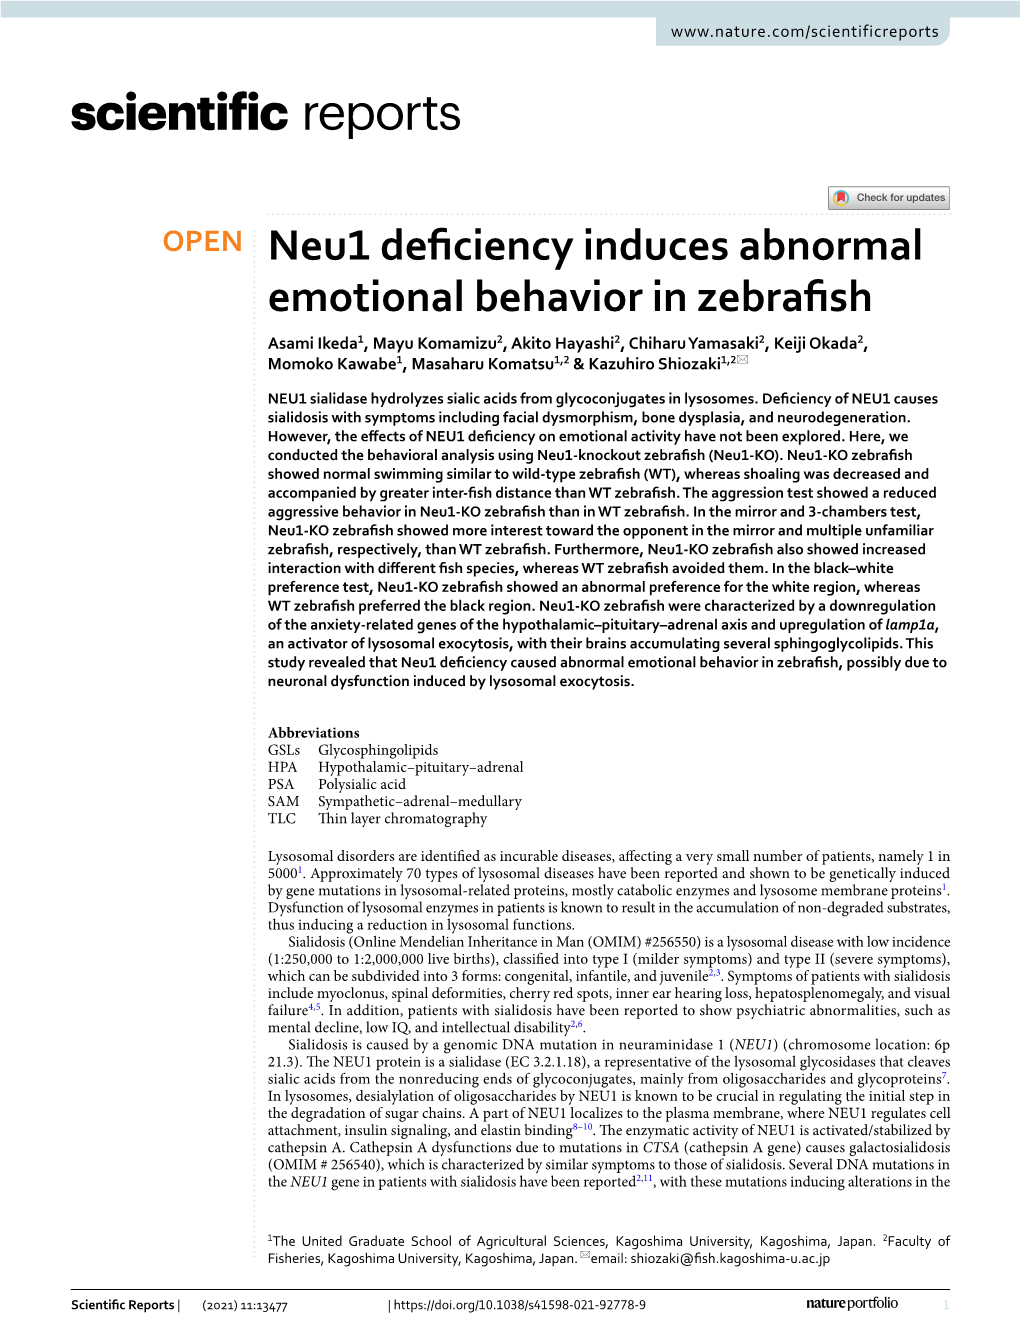 Neu1 Deficiency Induces Abnormal Emotional Behavior in Zebrafish